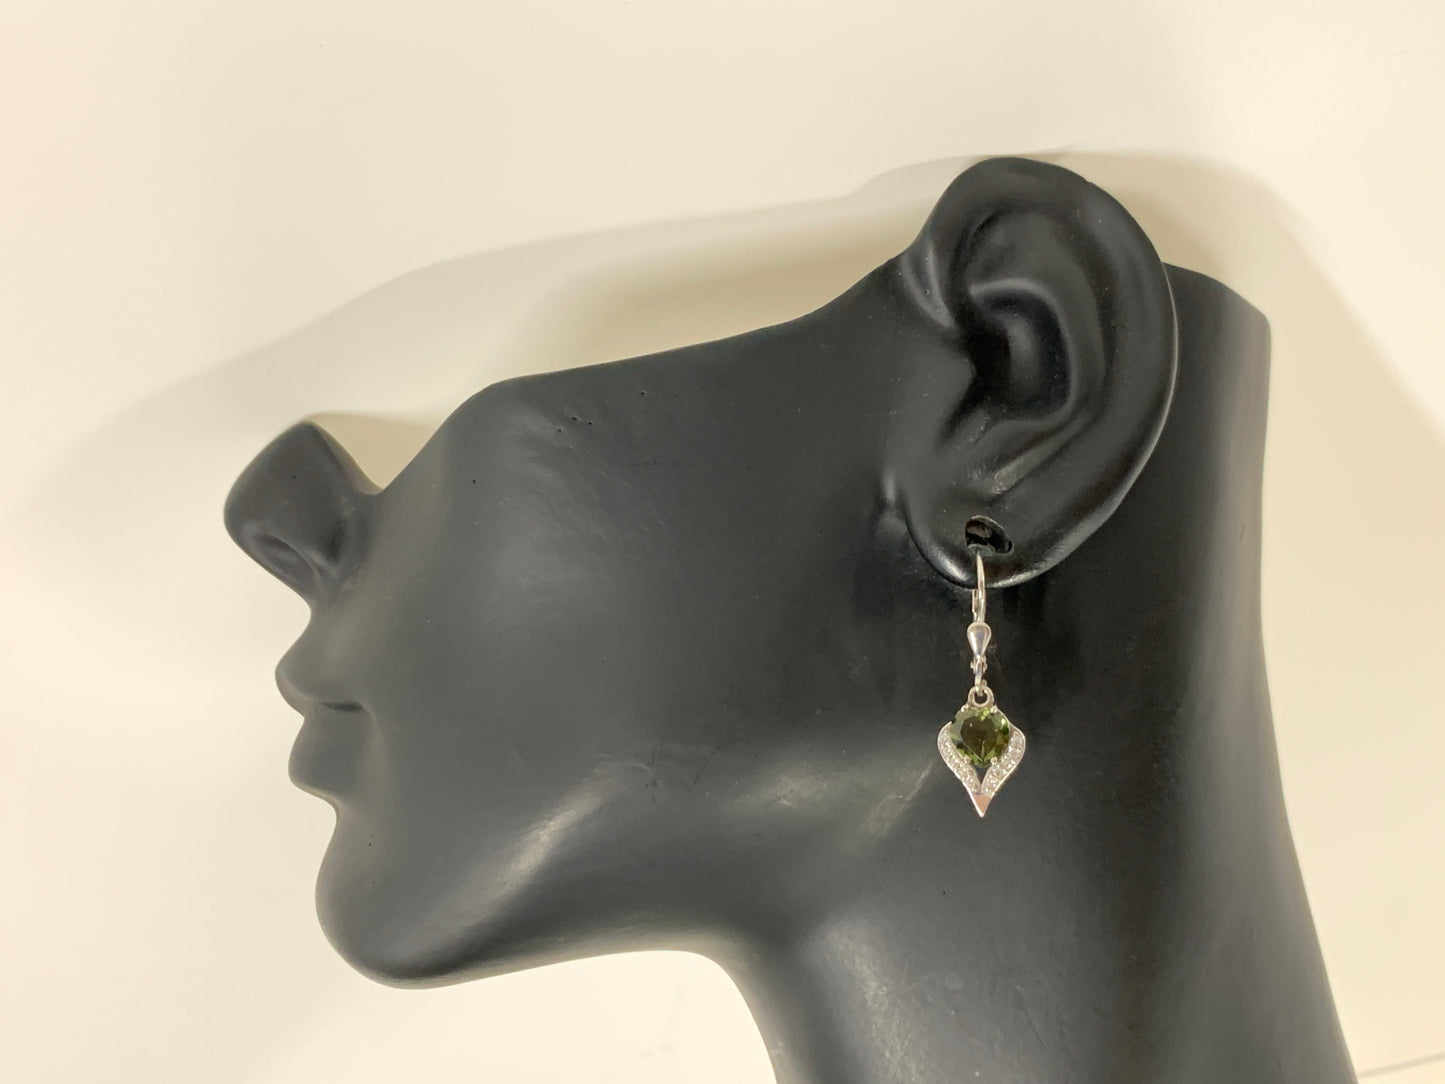 Moldavite Heart & Zircon Earrings